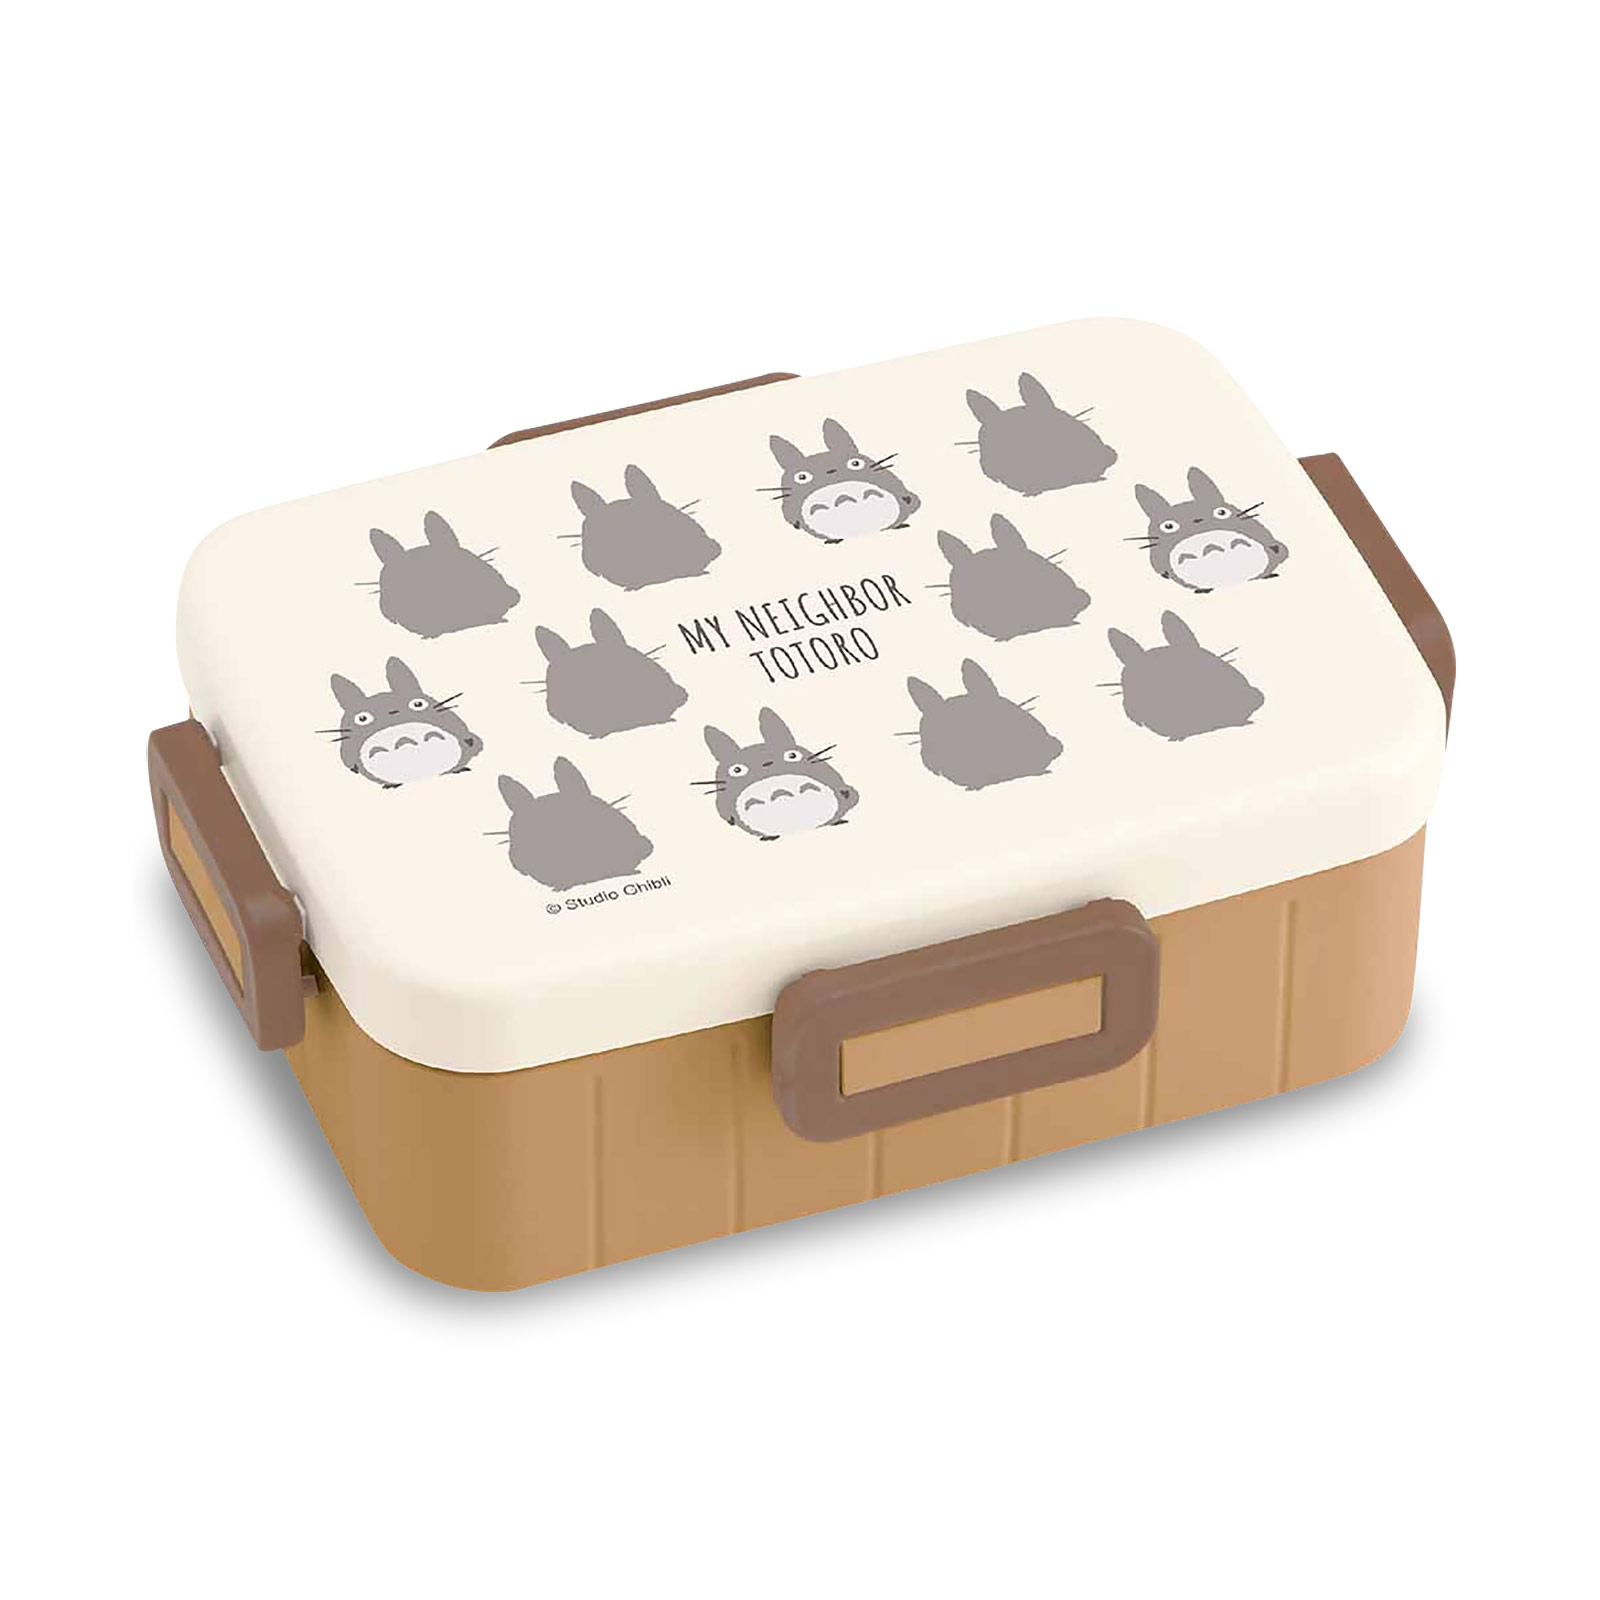 Totoro - Silhouette Lunchbox